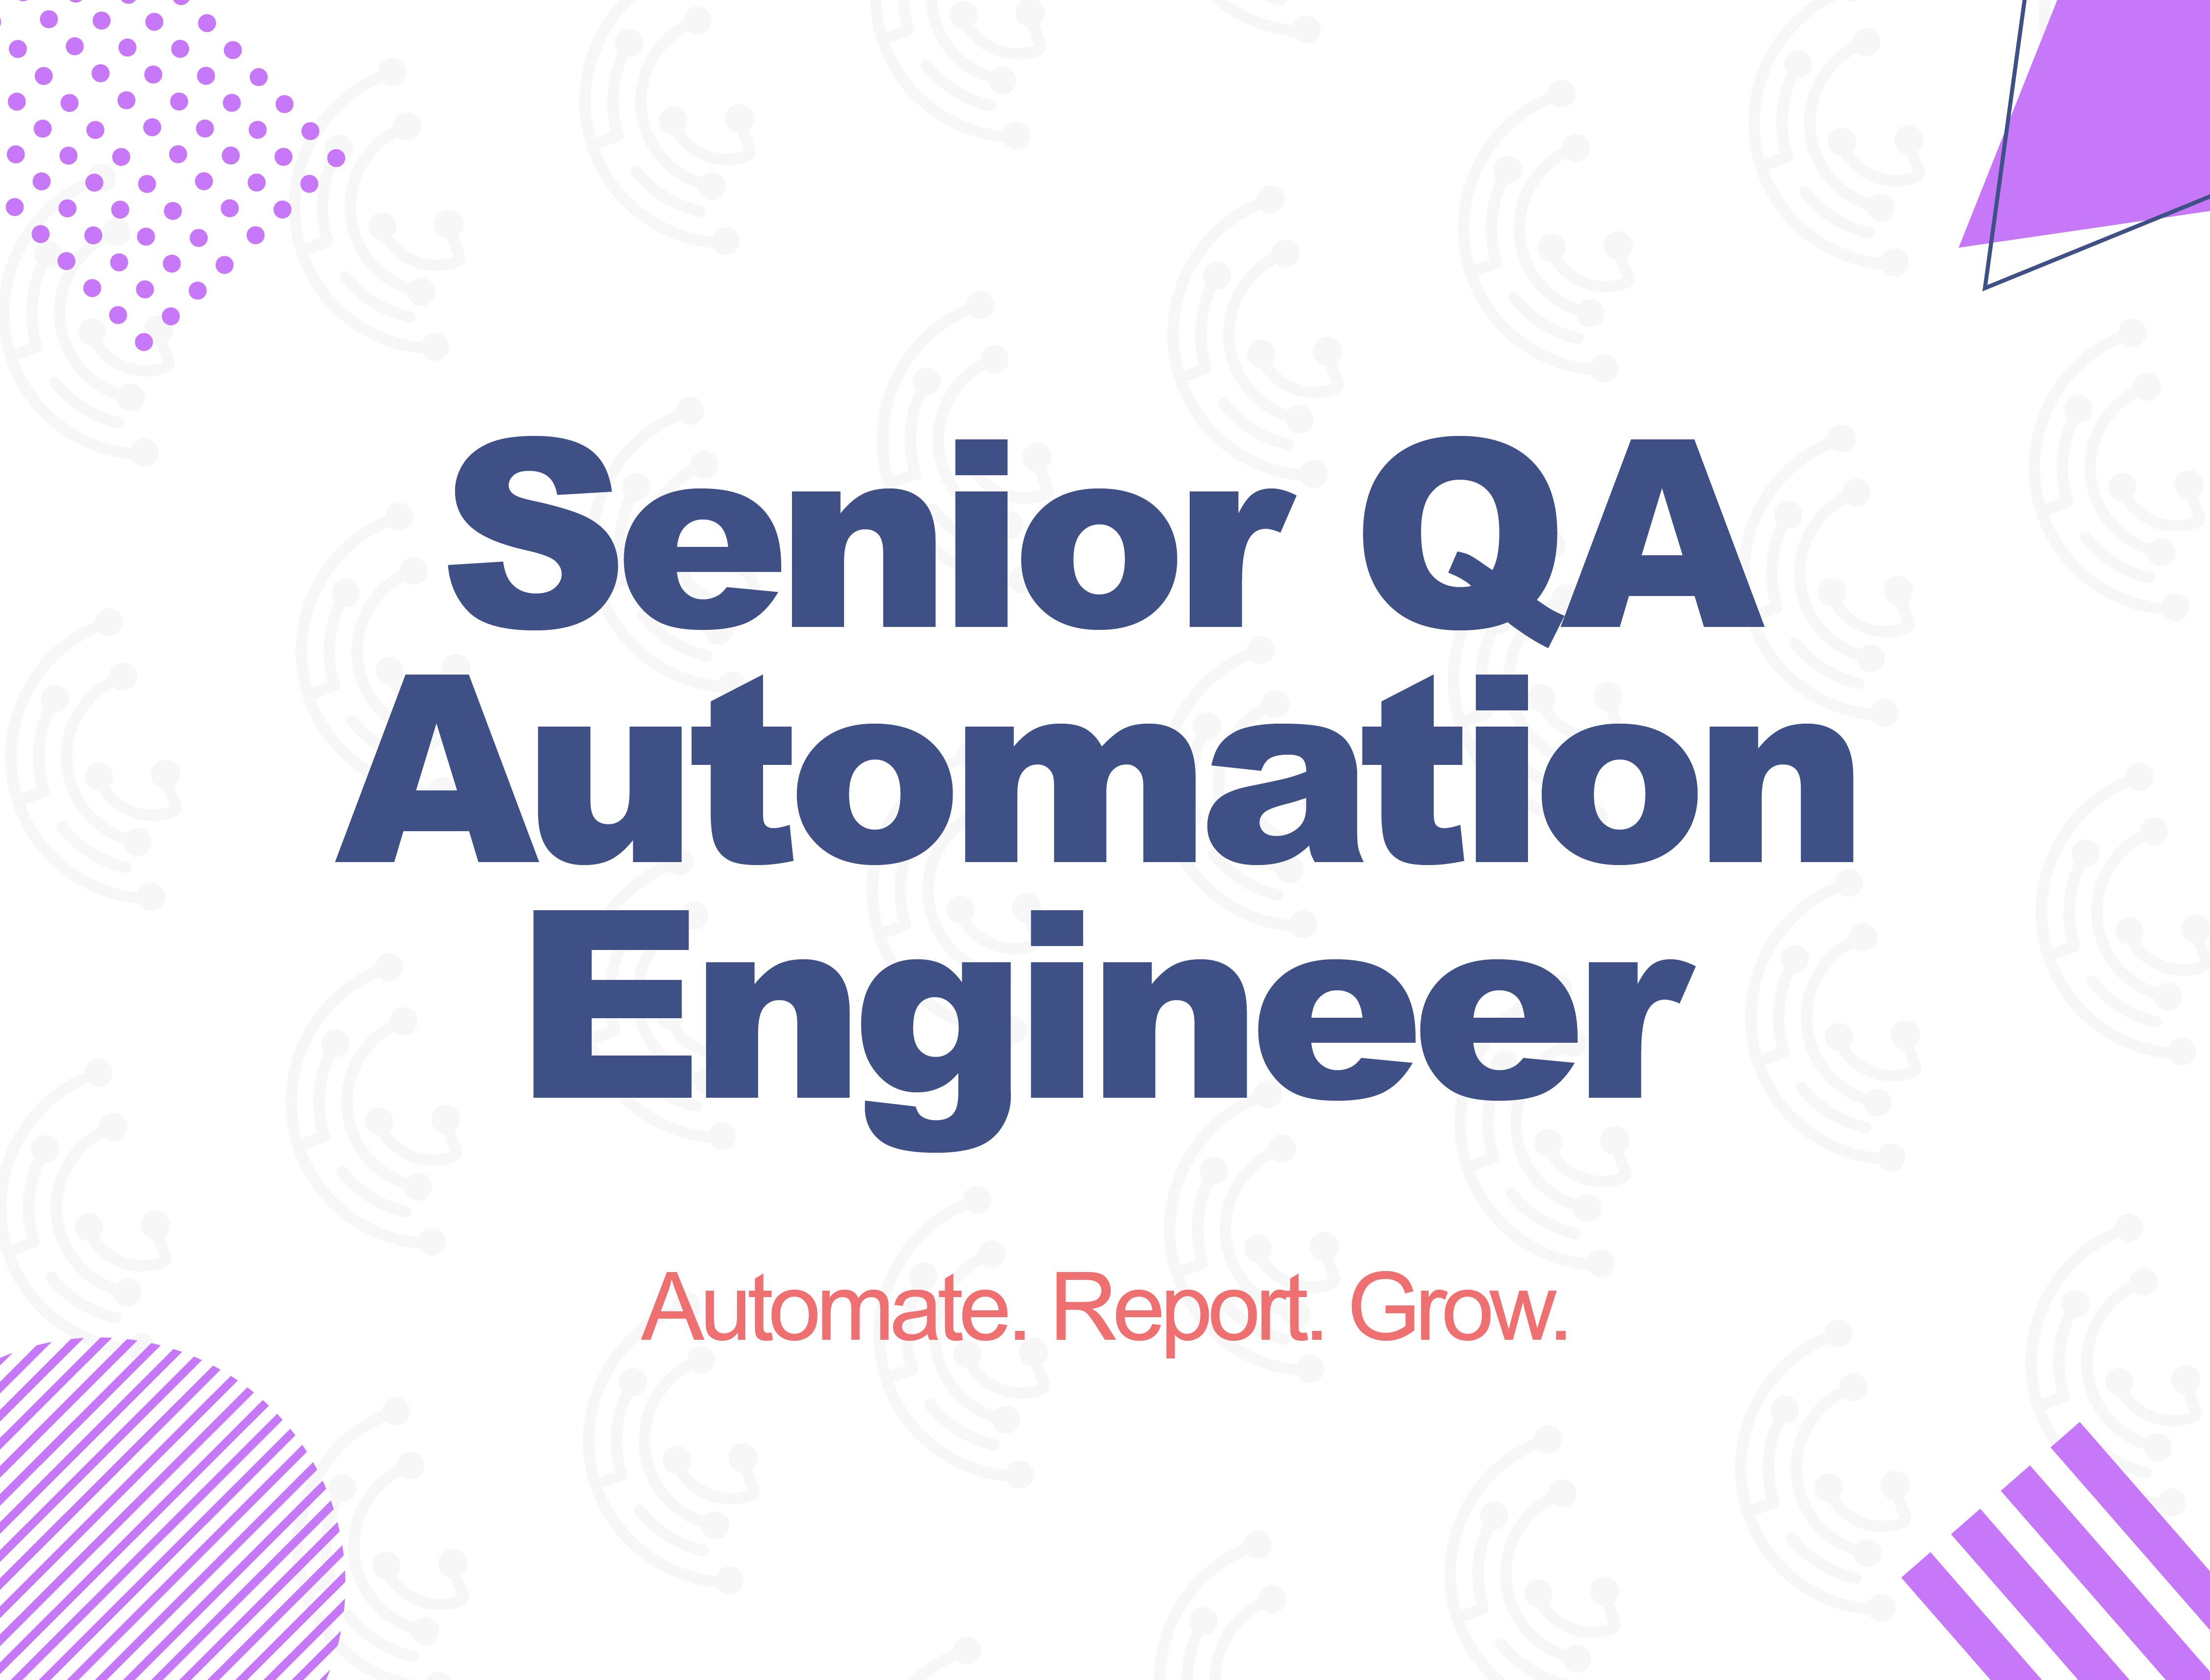 Senior QA Automation Engineer